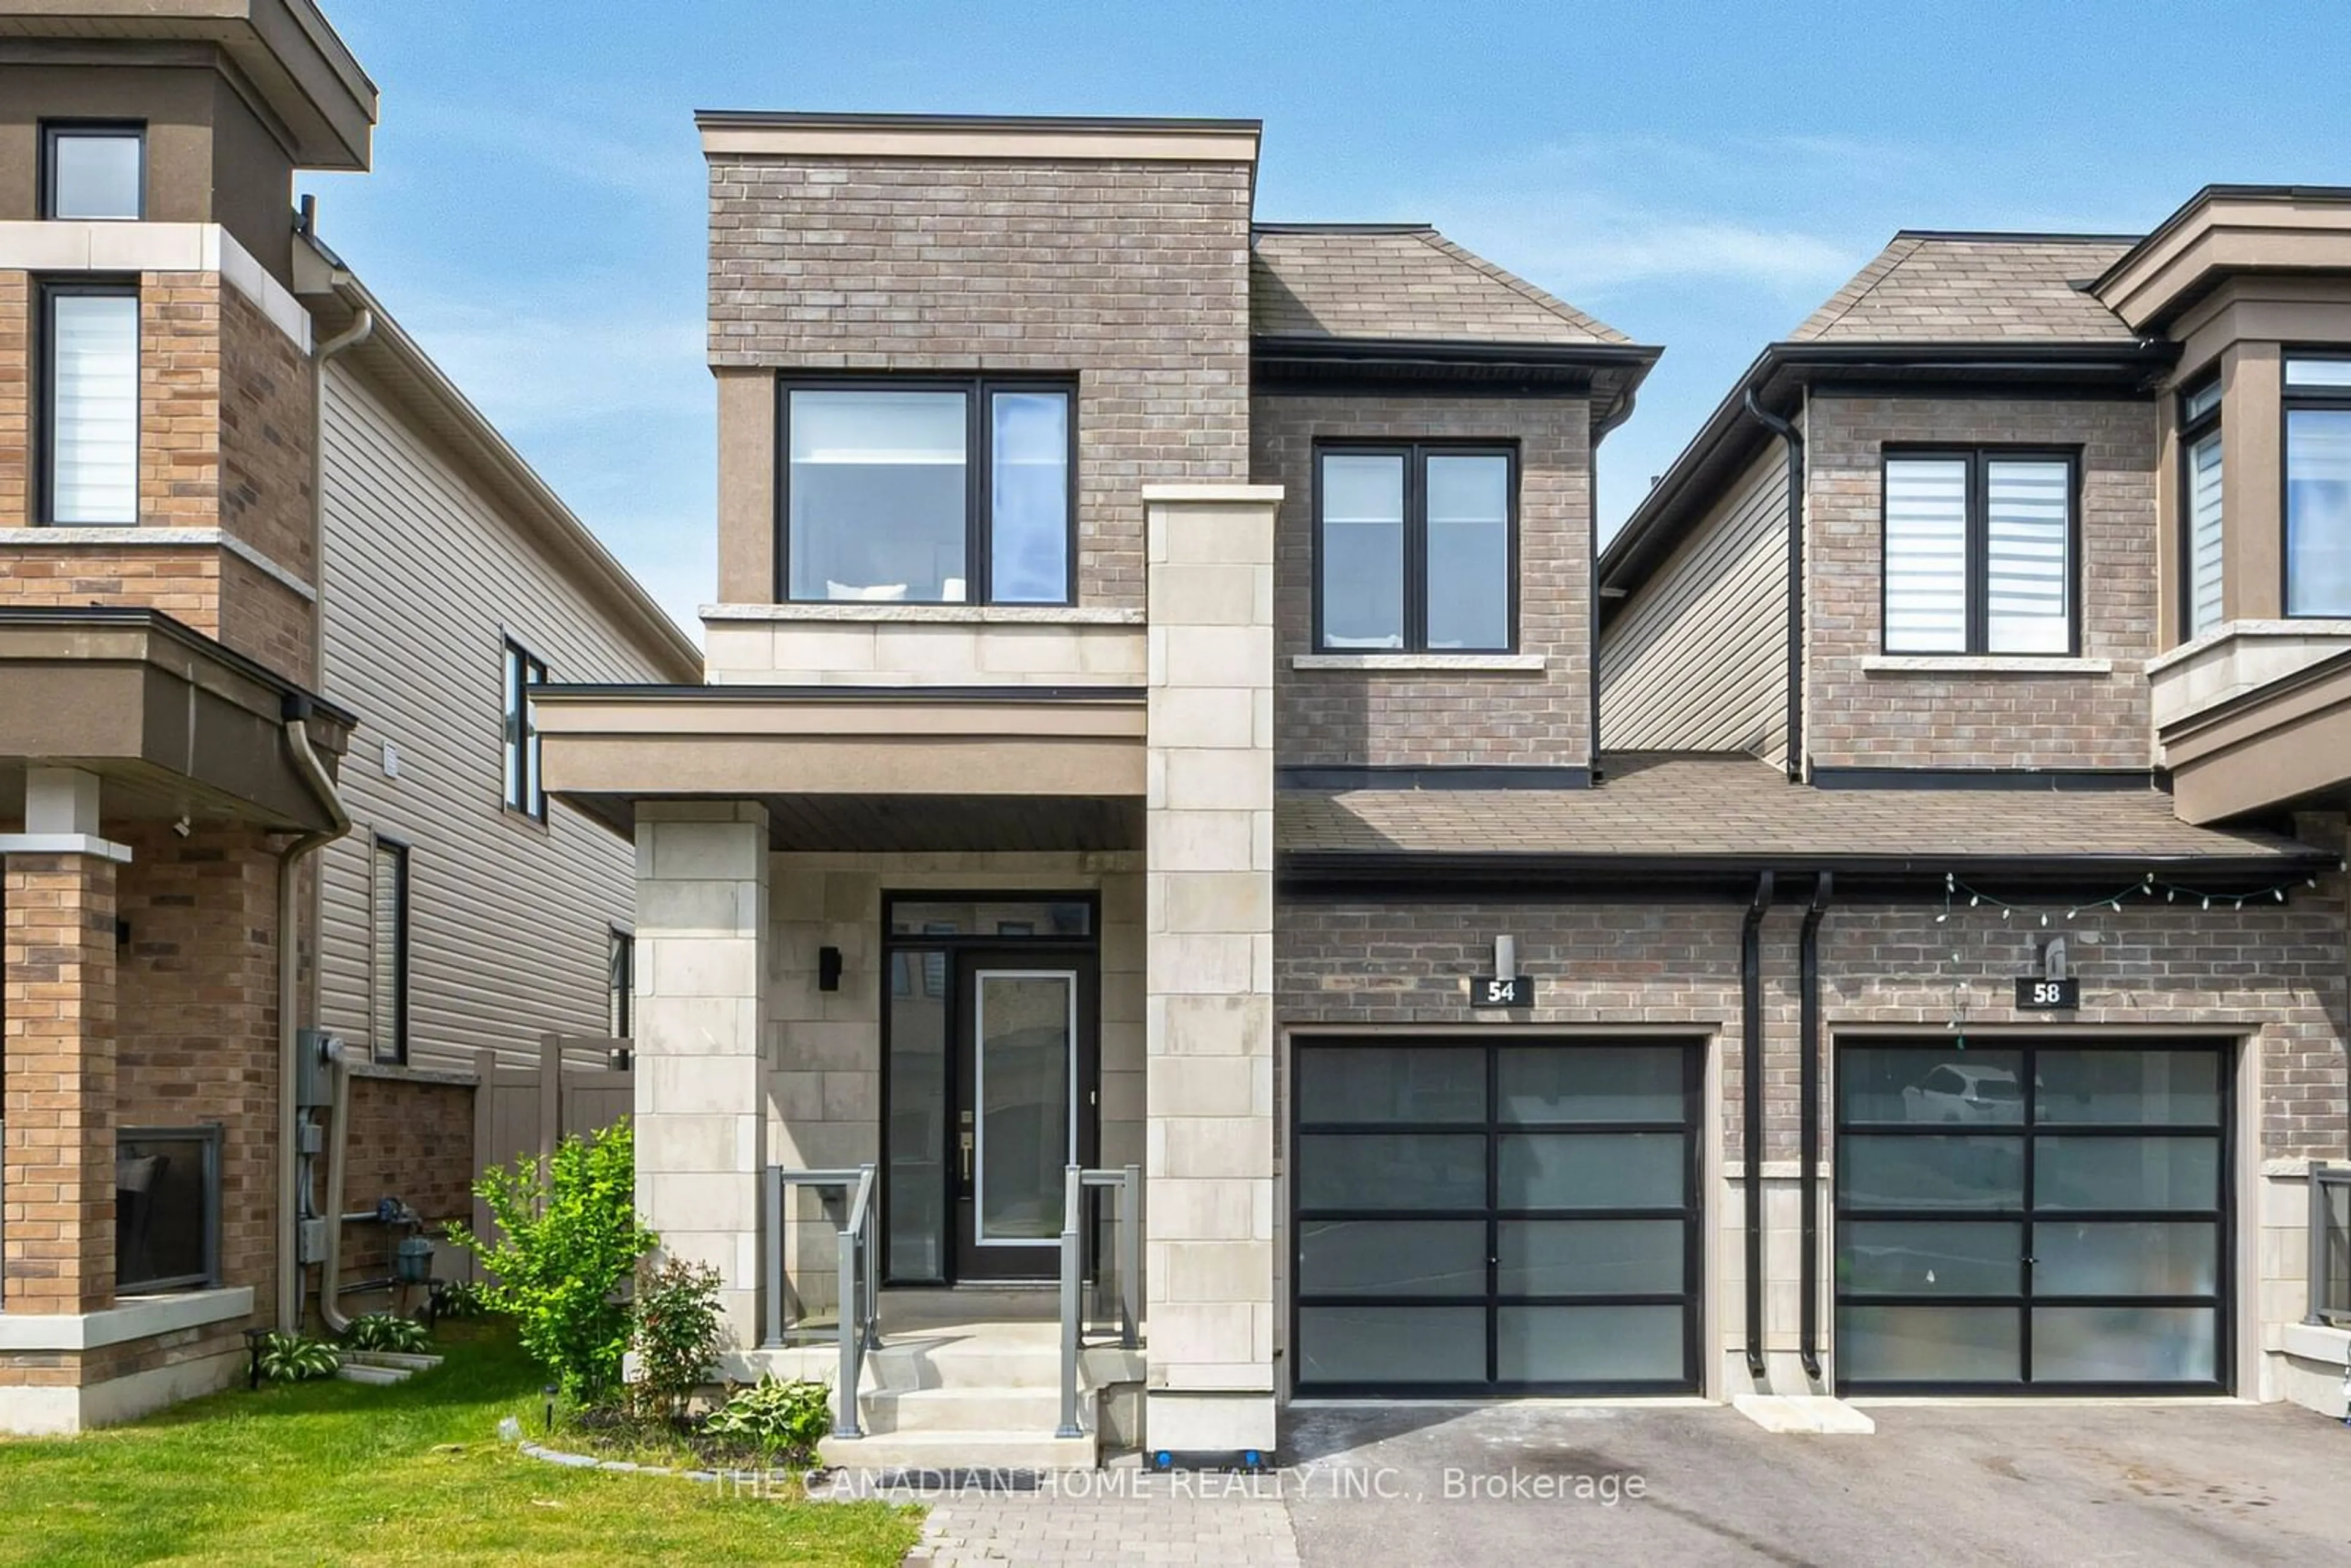 Home with brick exterior material for 54 Larkin Lane, Clarington Ontario L1C 2W3